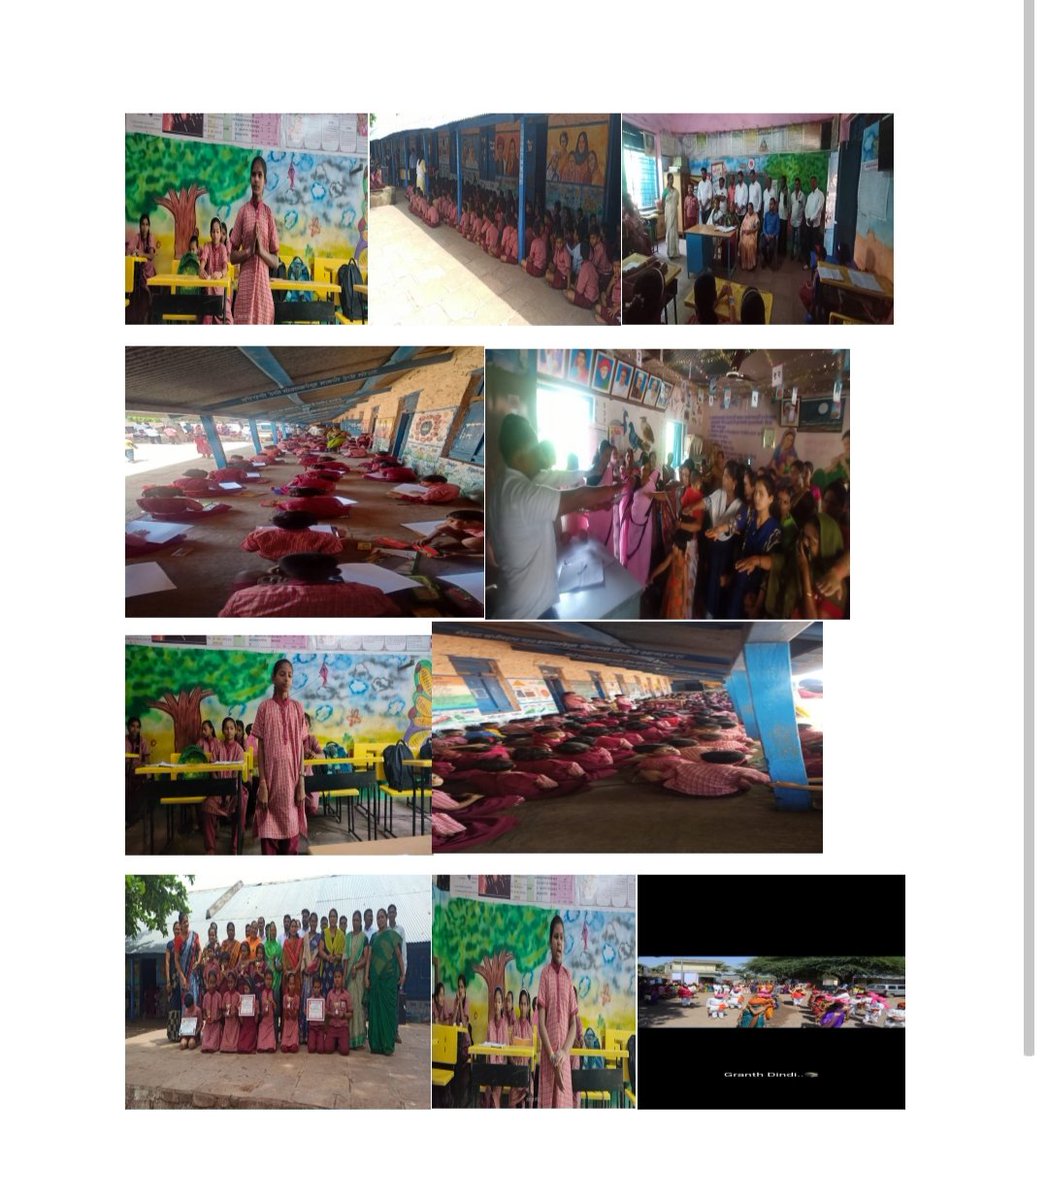 Awareness campaigns conducted by khandala Nagarpanchayat for promotion of Majhi vasundhara 3.0
#epledge
#majhivasundhara3.0
#swacchsarvekshan2023
#swacchmaharashtra